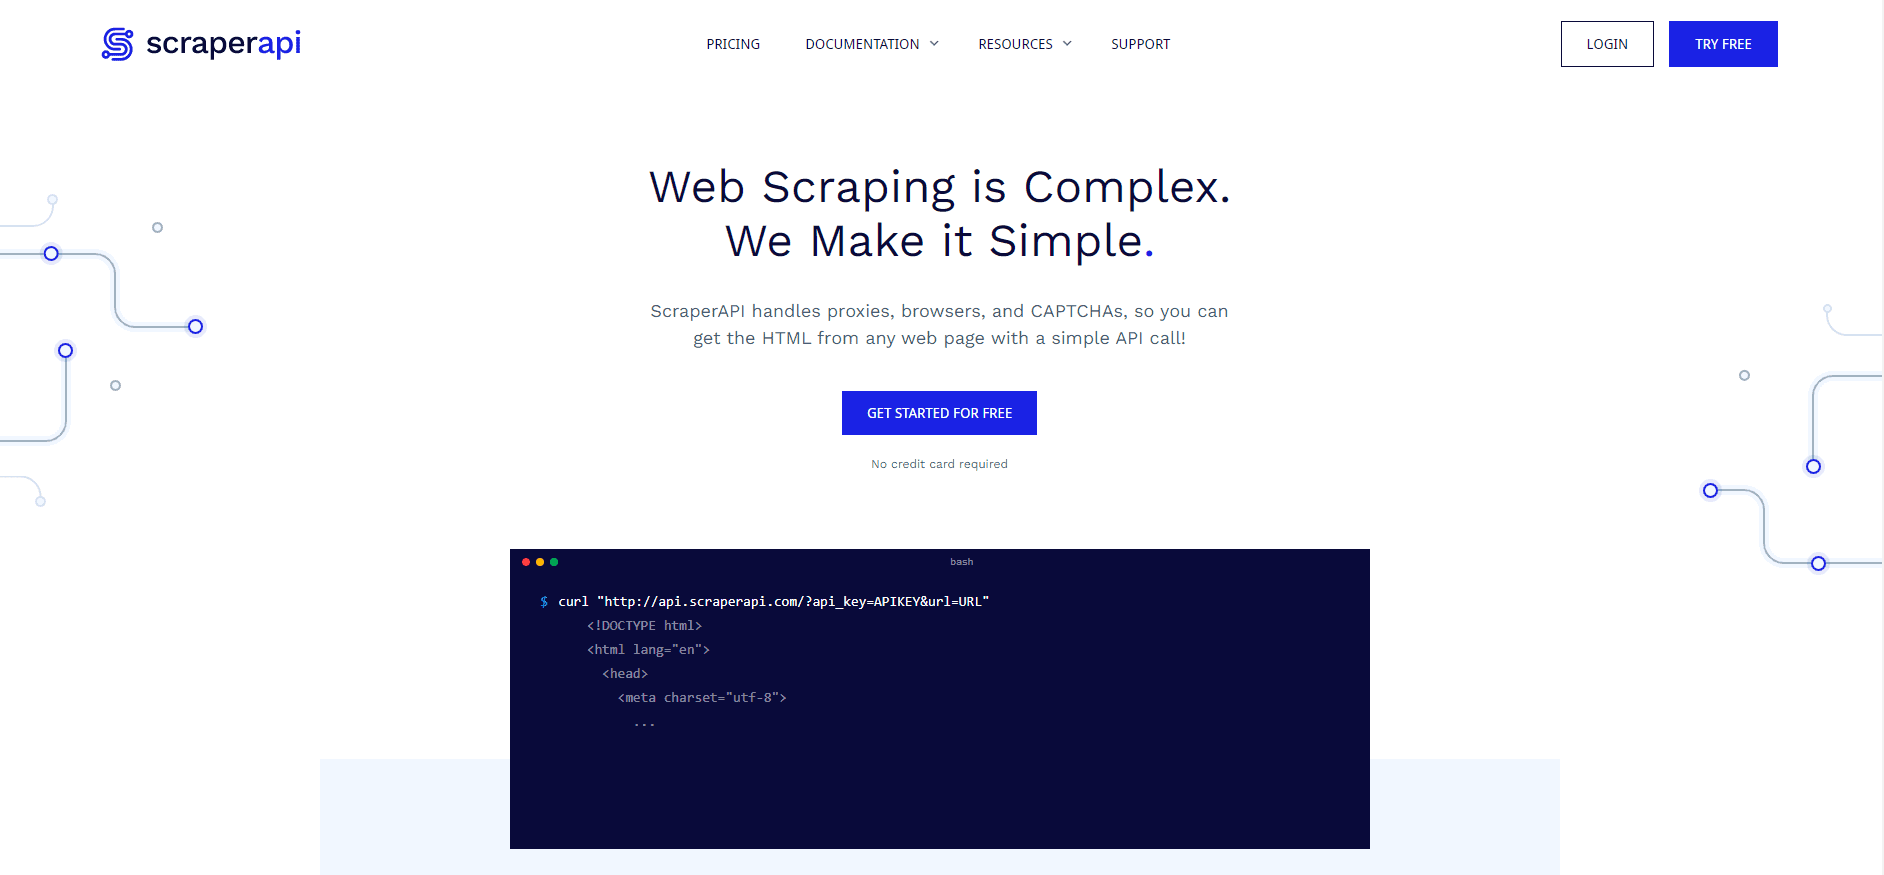 Scraper API Overview